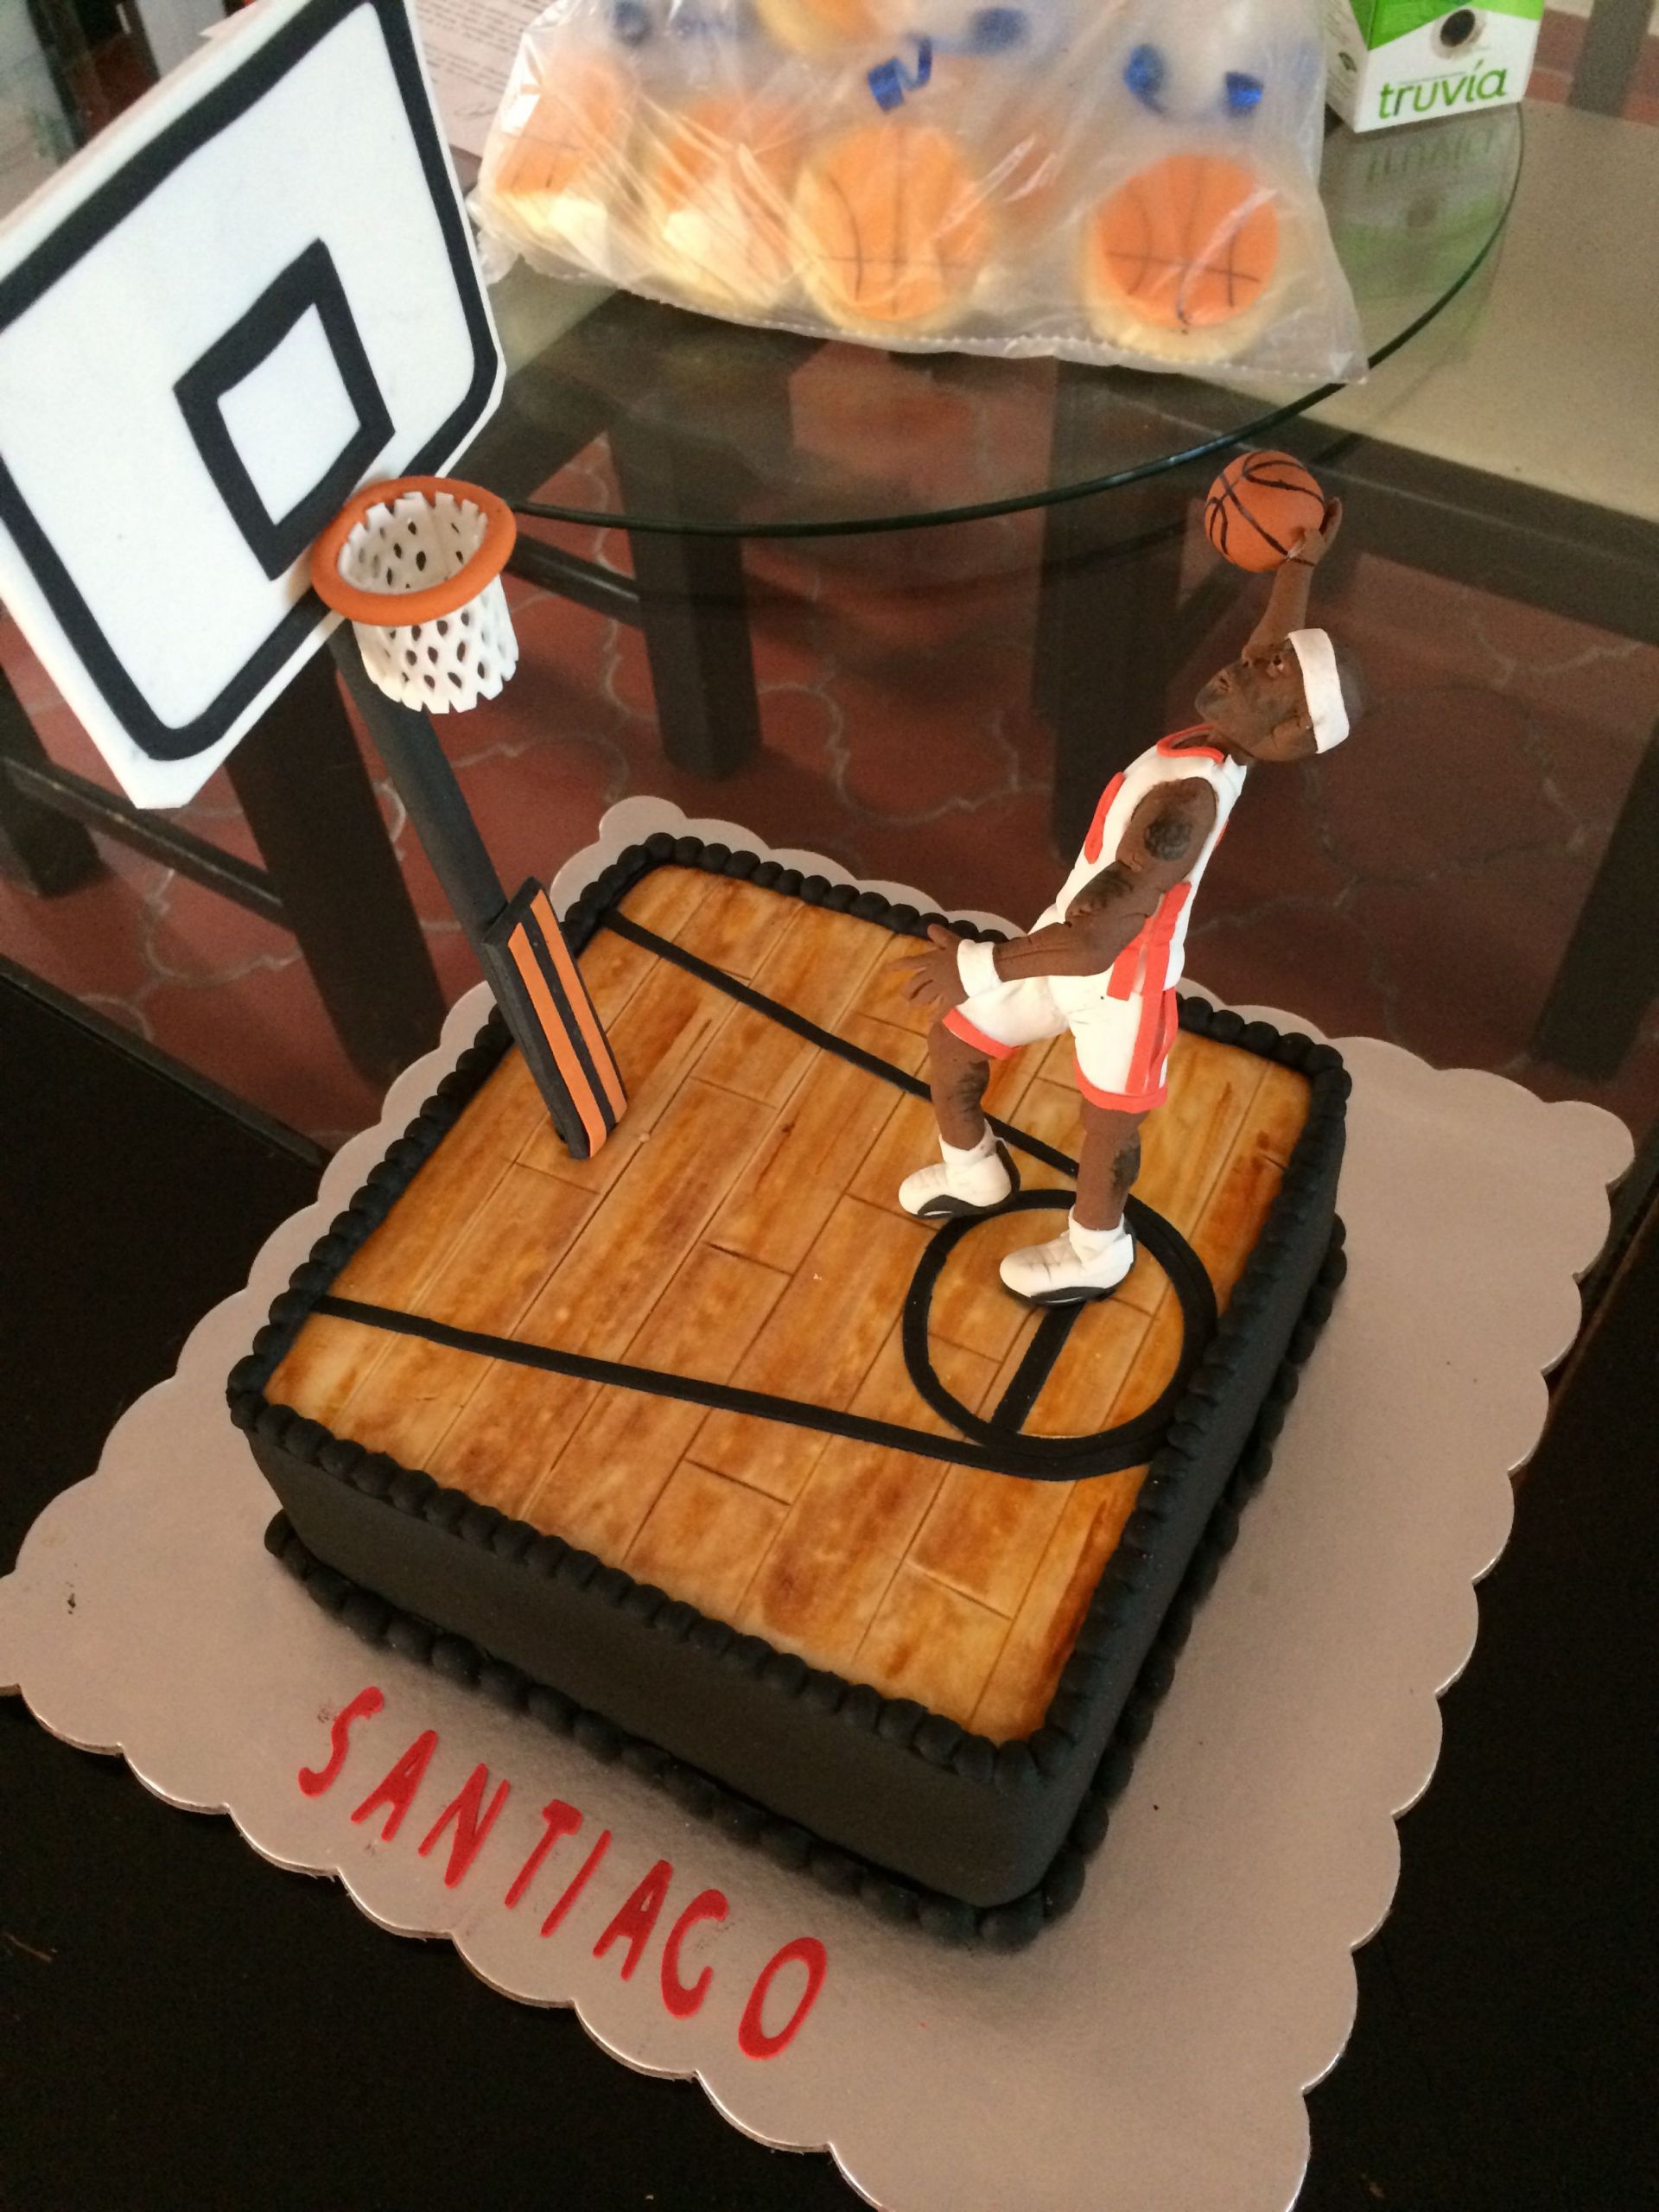 Lebron James Birthday Cake
 939cf25e6dfeb0d9012ae178e2189d27 JPEG Image 2448